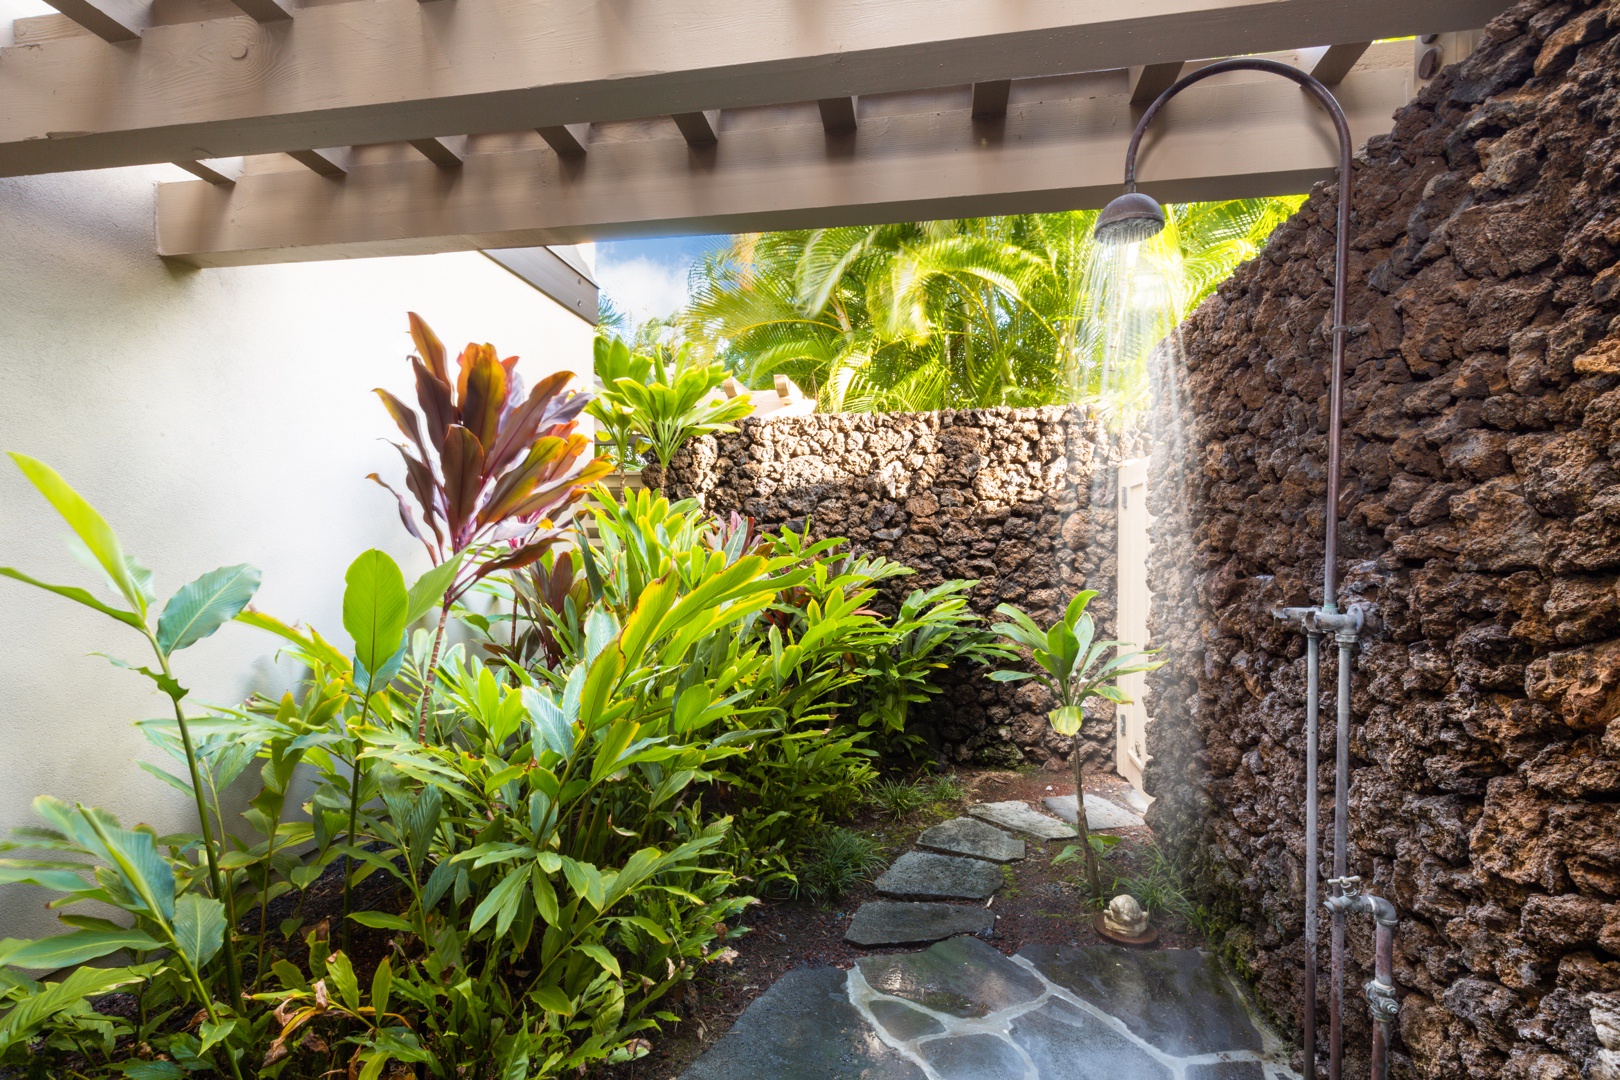 Kailua Kona Vacation Rentals, 3BD Ke Alaula Villa (210A) at Four Seasons Resort at Hualalai - Lush outdoor shower garden - a true tropical treat!